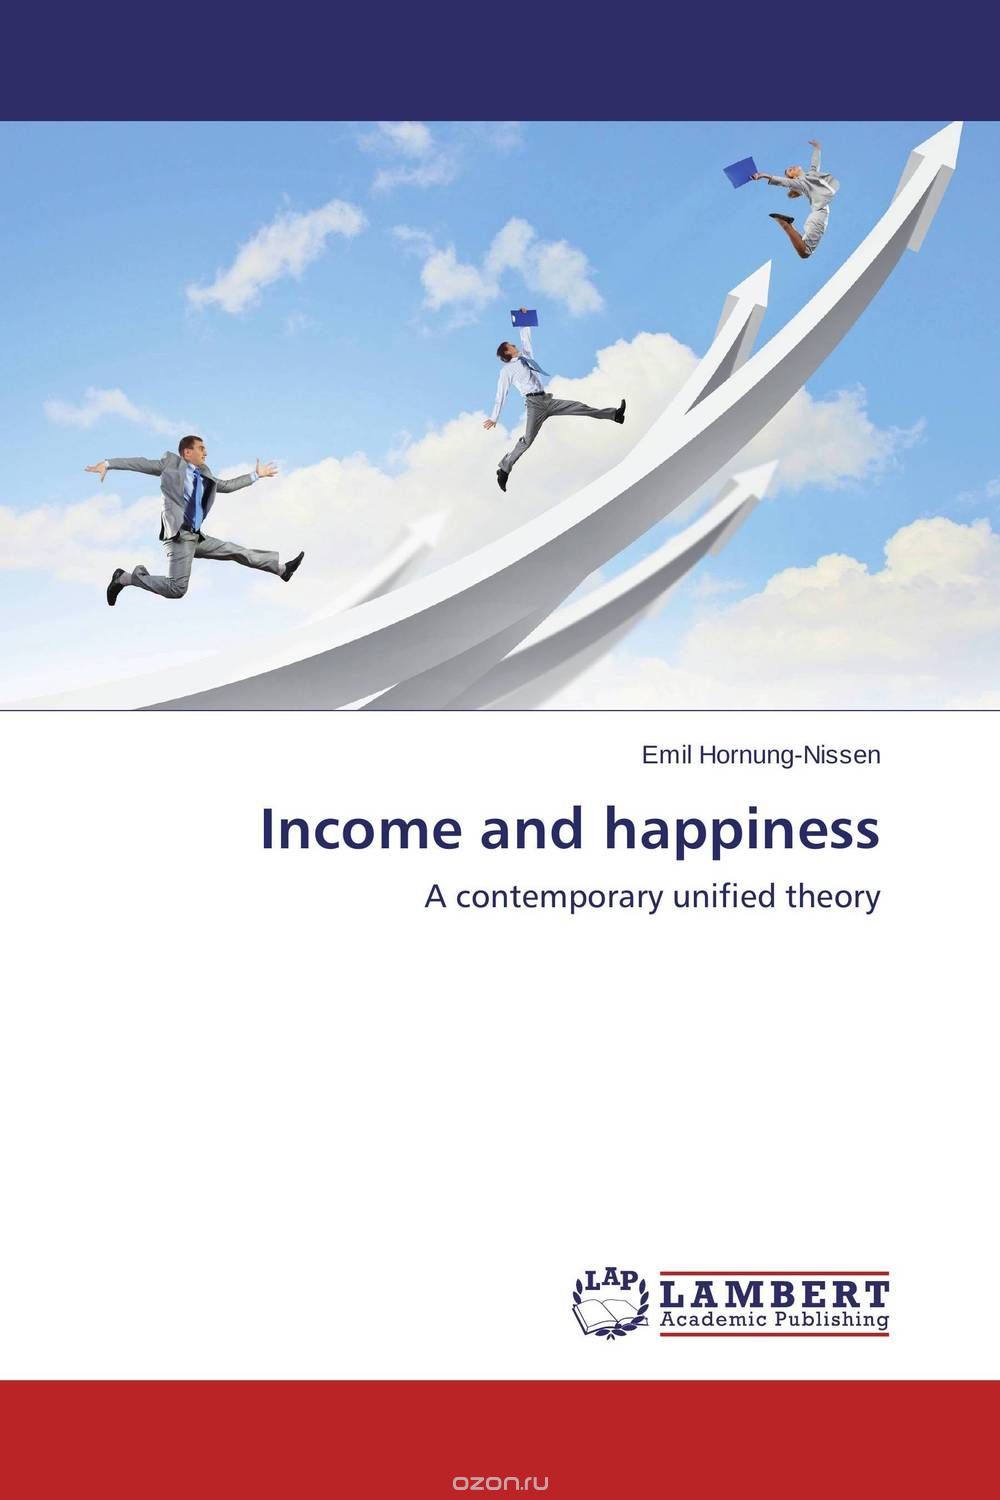 Скачать книгу "Income and happiness"